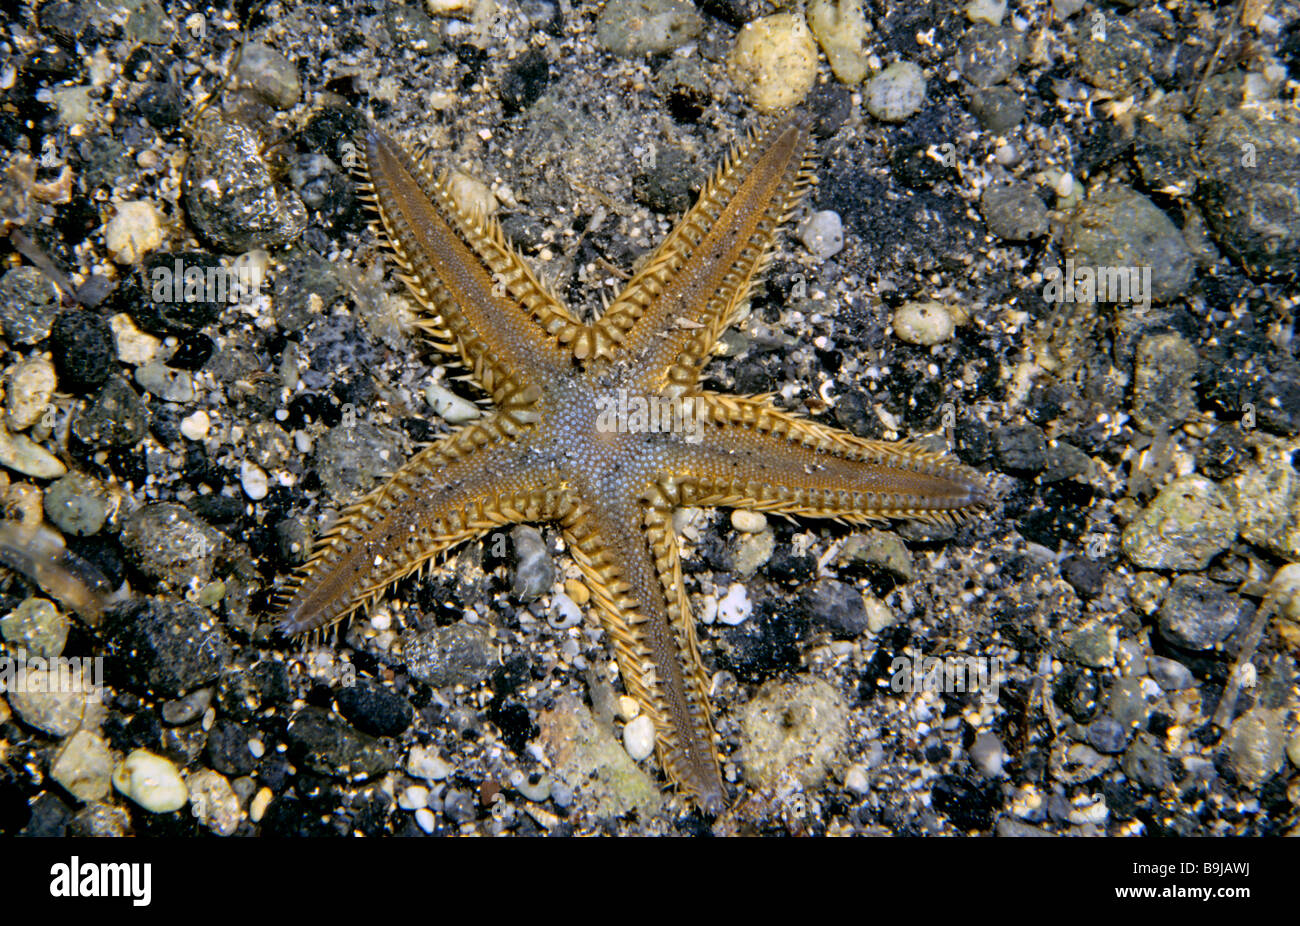 Astropecten aranciacus (Astropecten aranciacus), sea star, Mediterranean Sea, Turkey Stock Photo